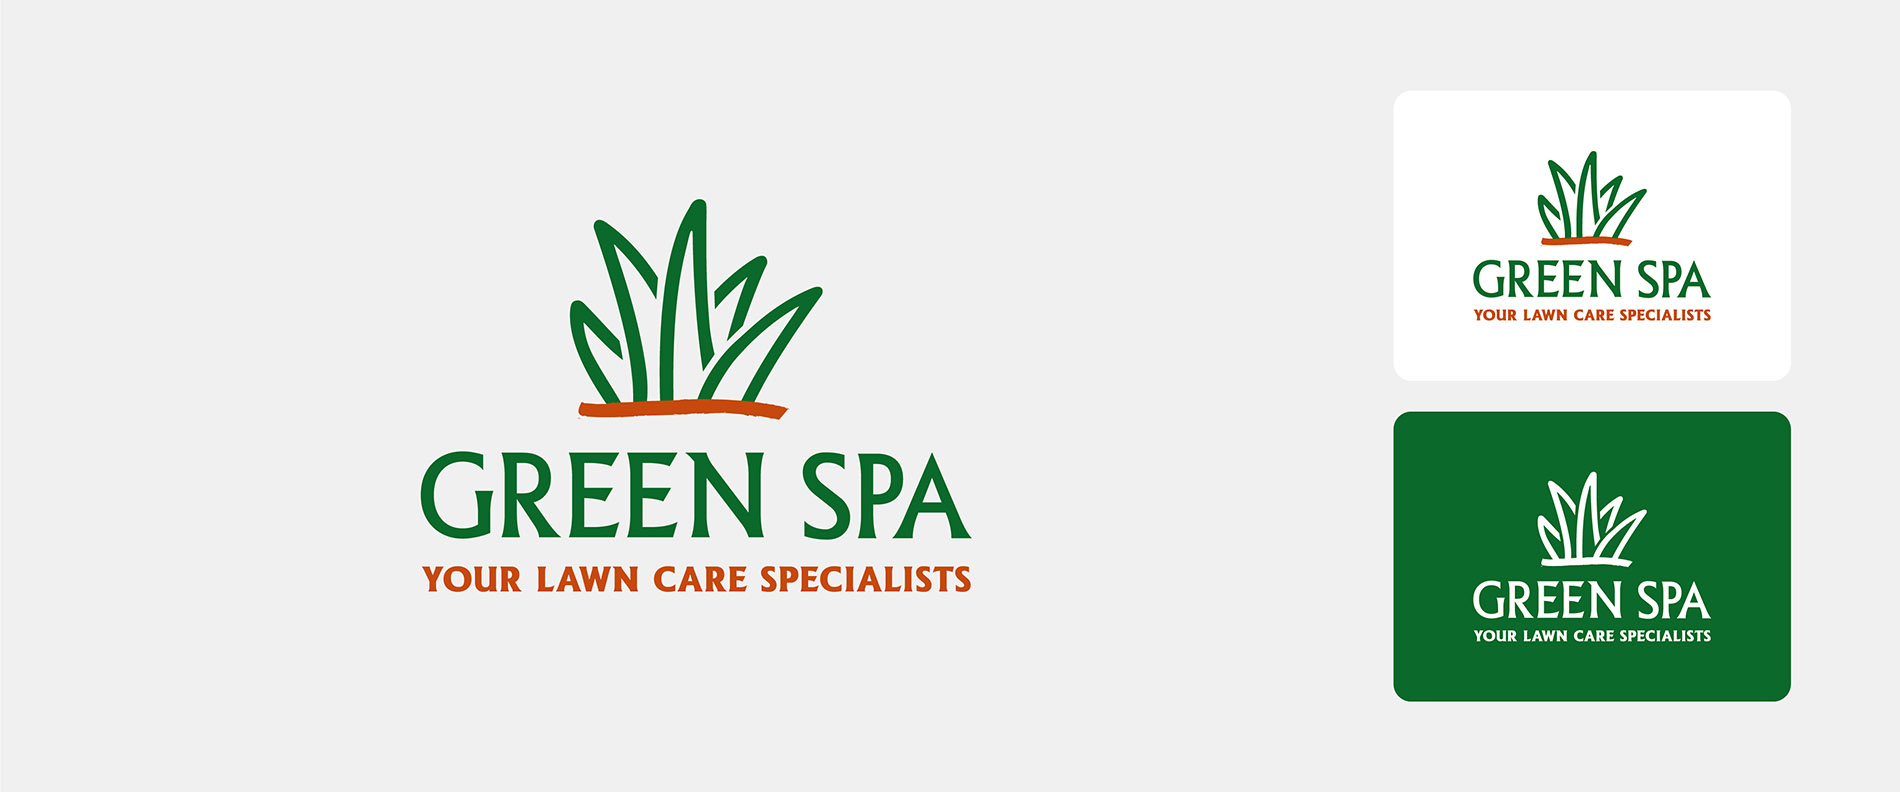 Green Spa Lawn Care - Logo Identity